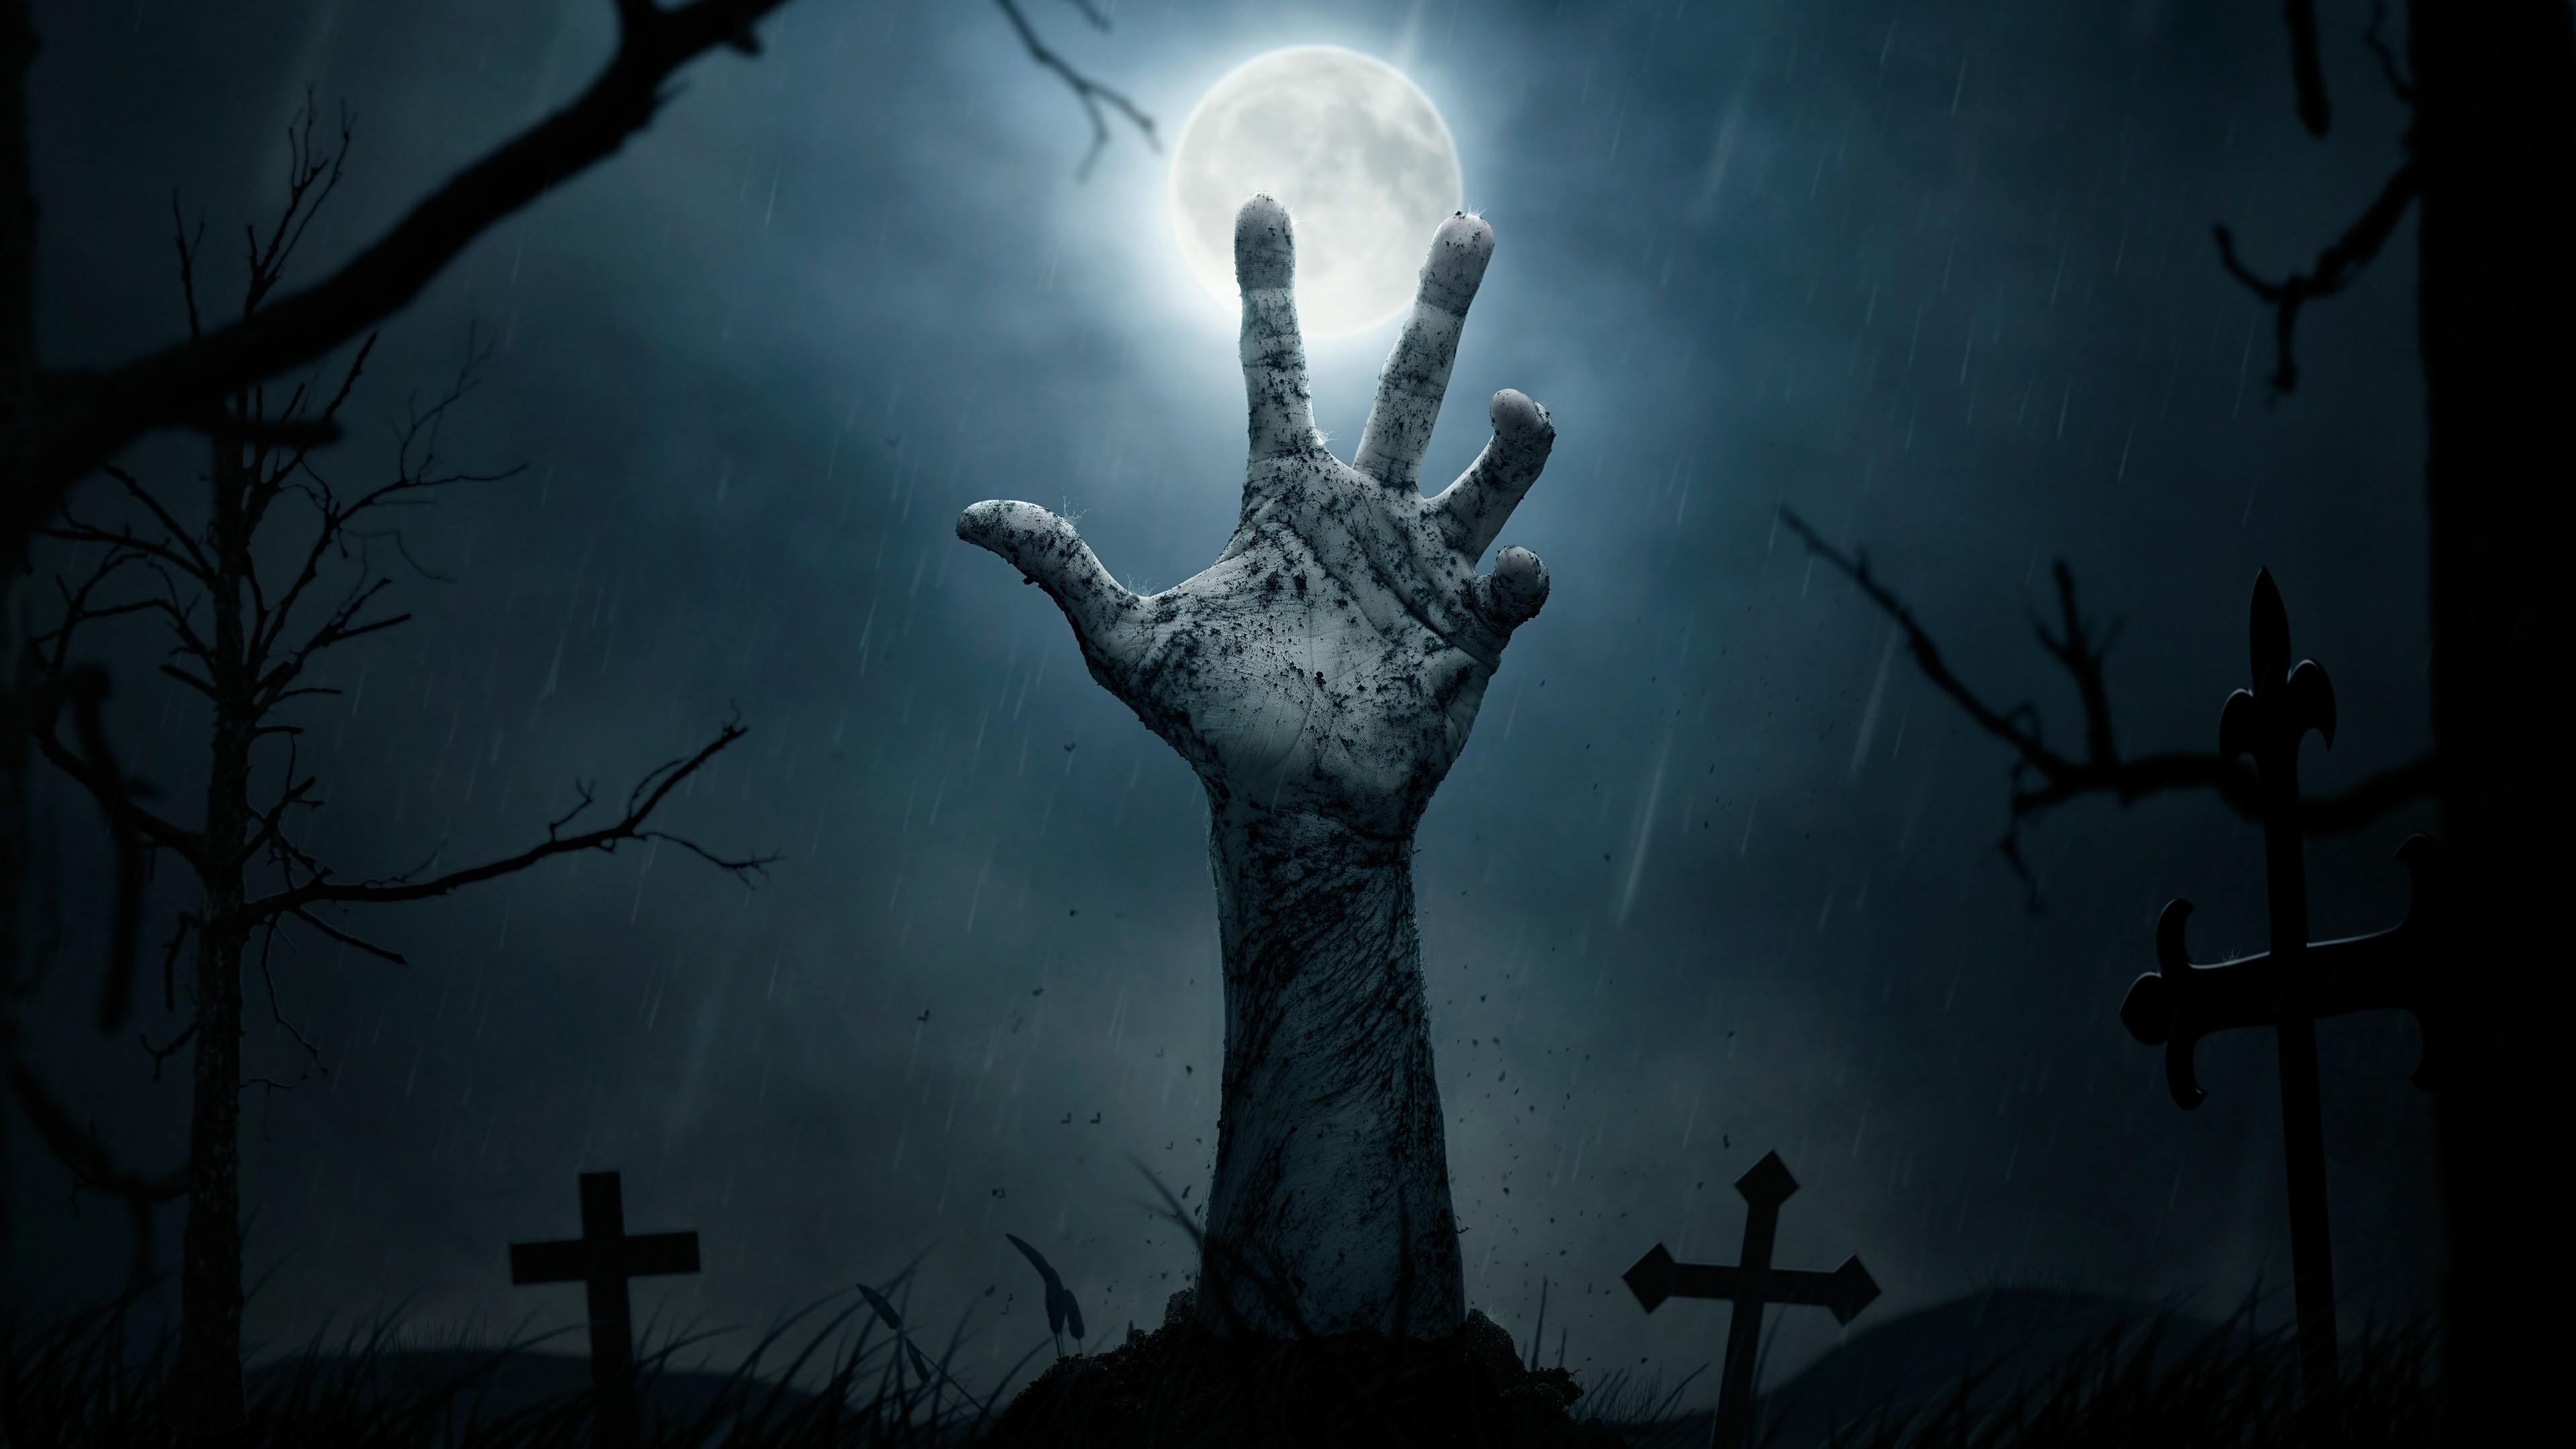 Creepy Night Cemetery With A Zombie Hand 4K UltraHD Wallpaper